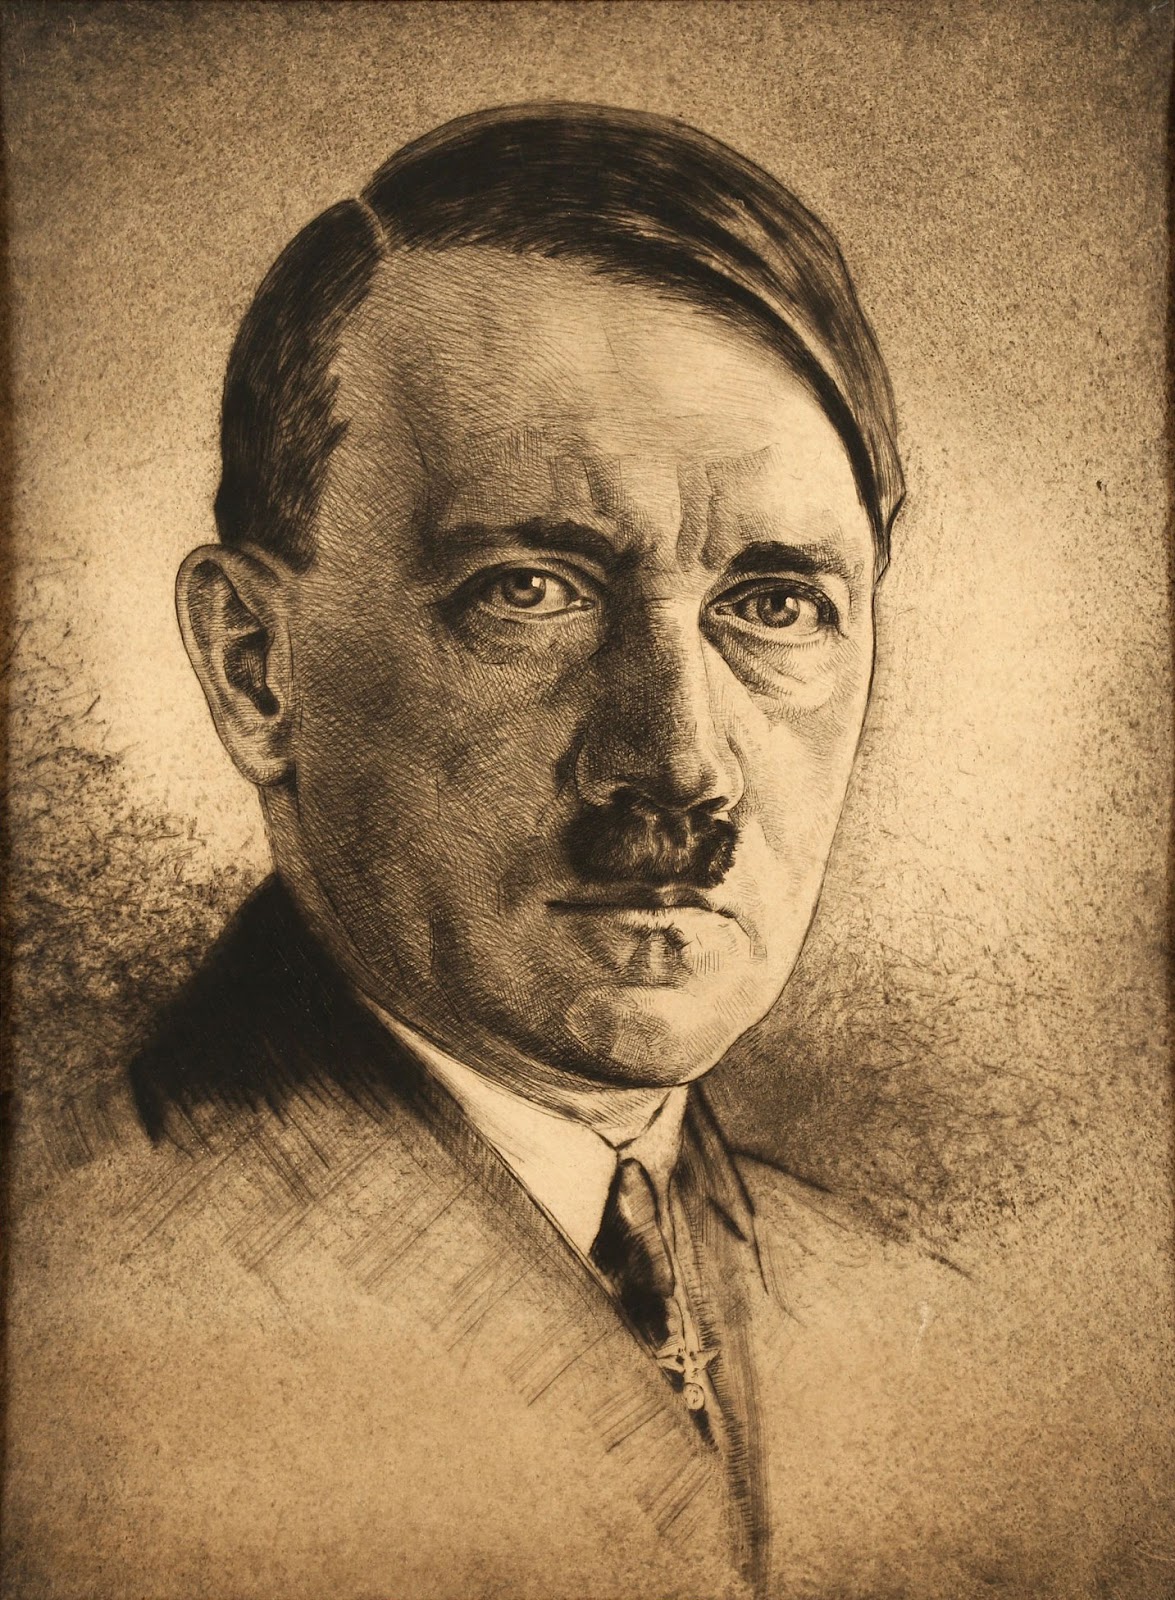 Neues Europa: Portraits of Adolf Hitler - Part IV